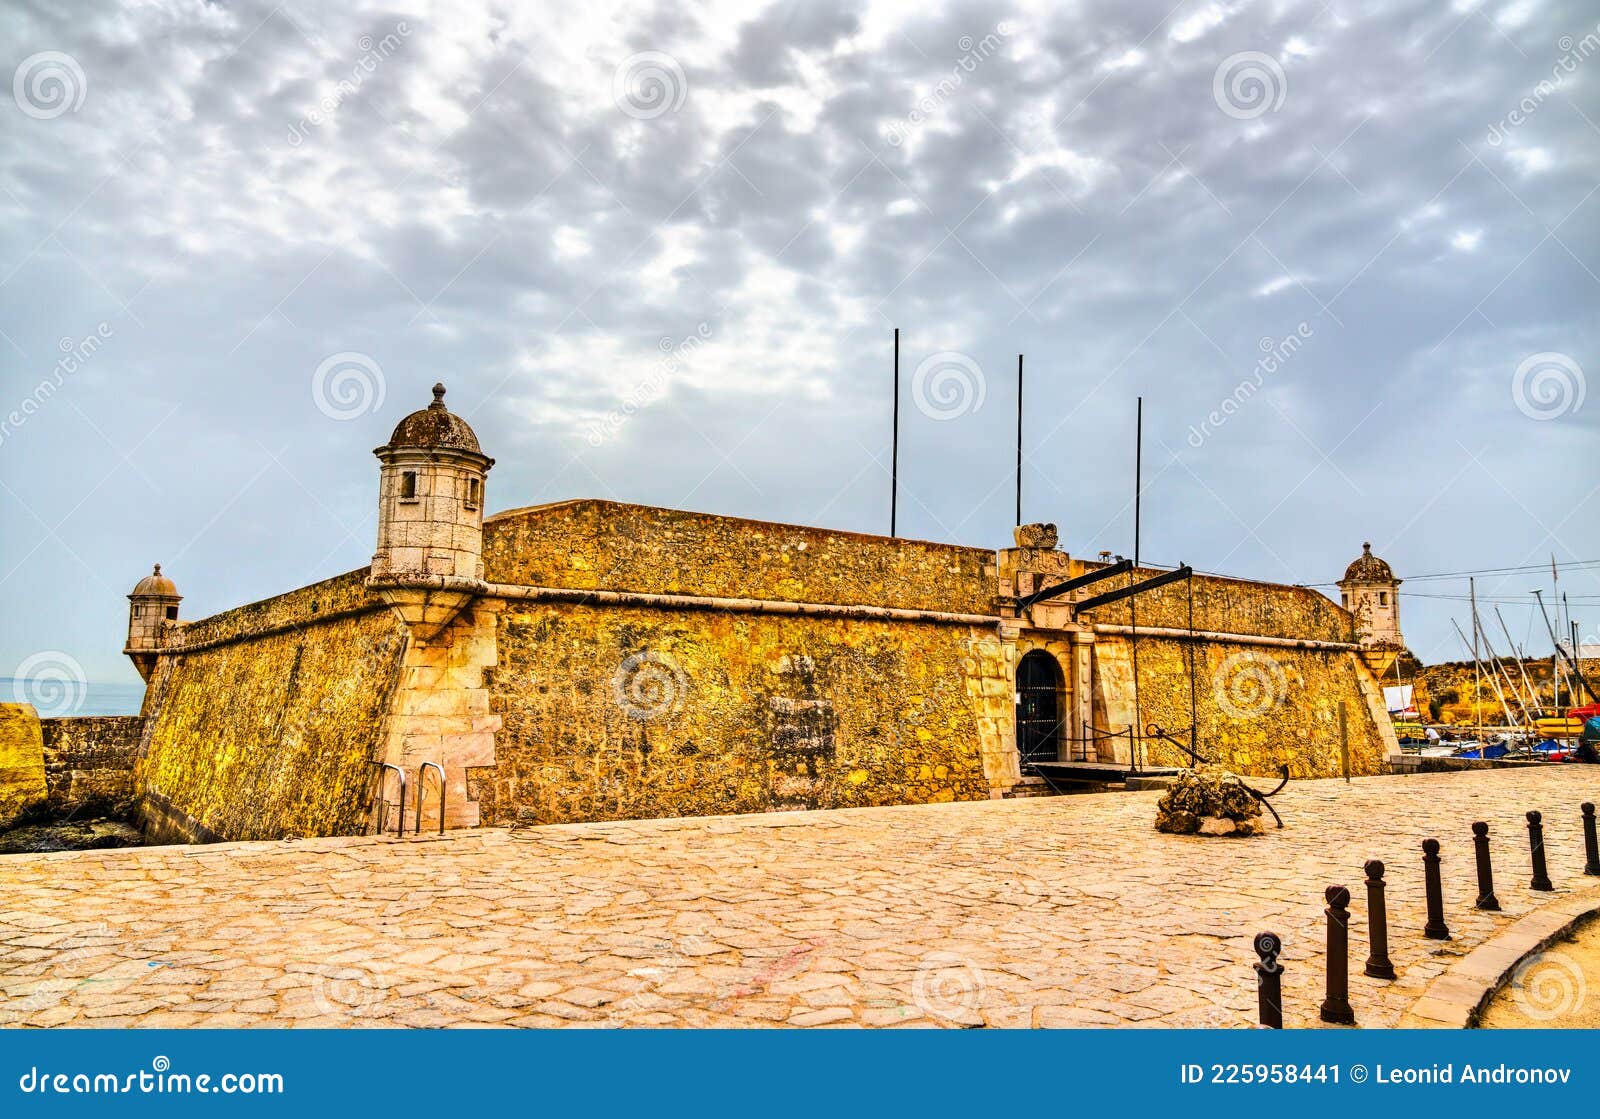 fort of ponta da bandeira in lagos, portugal